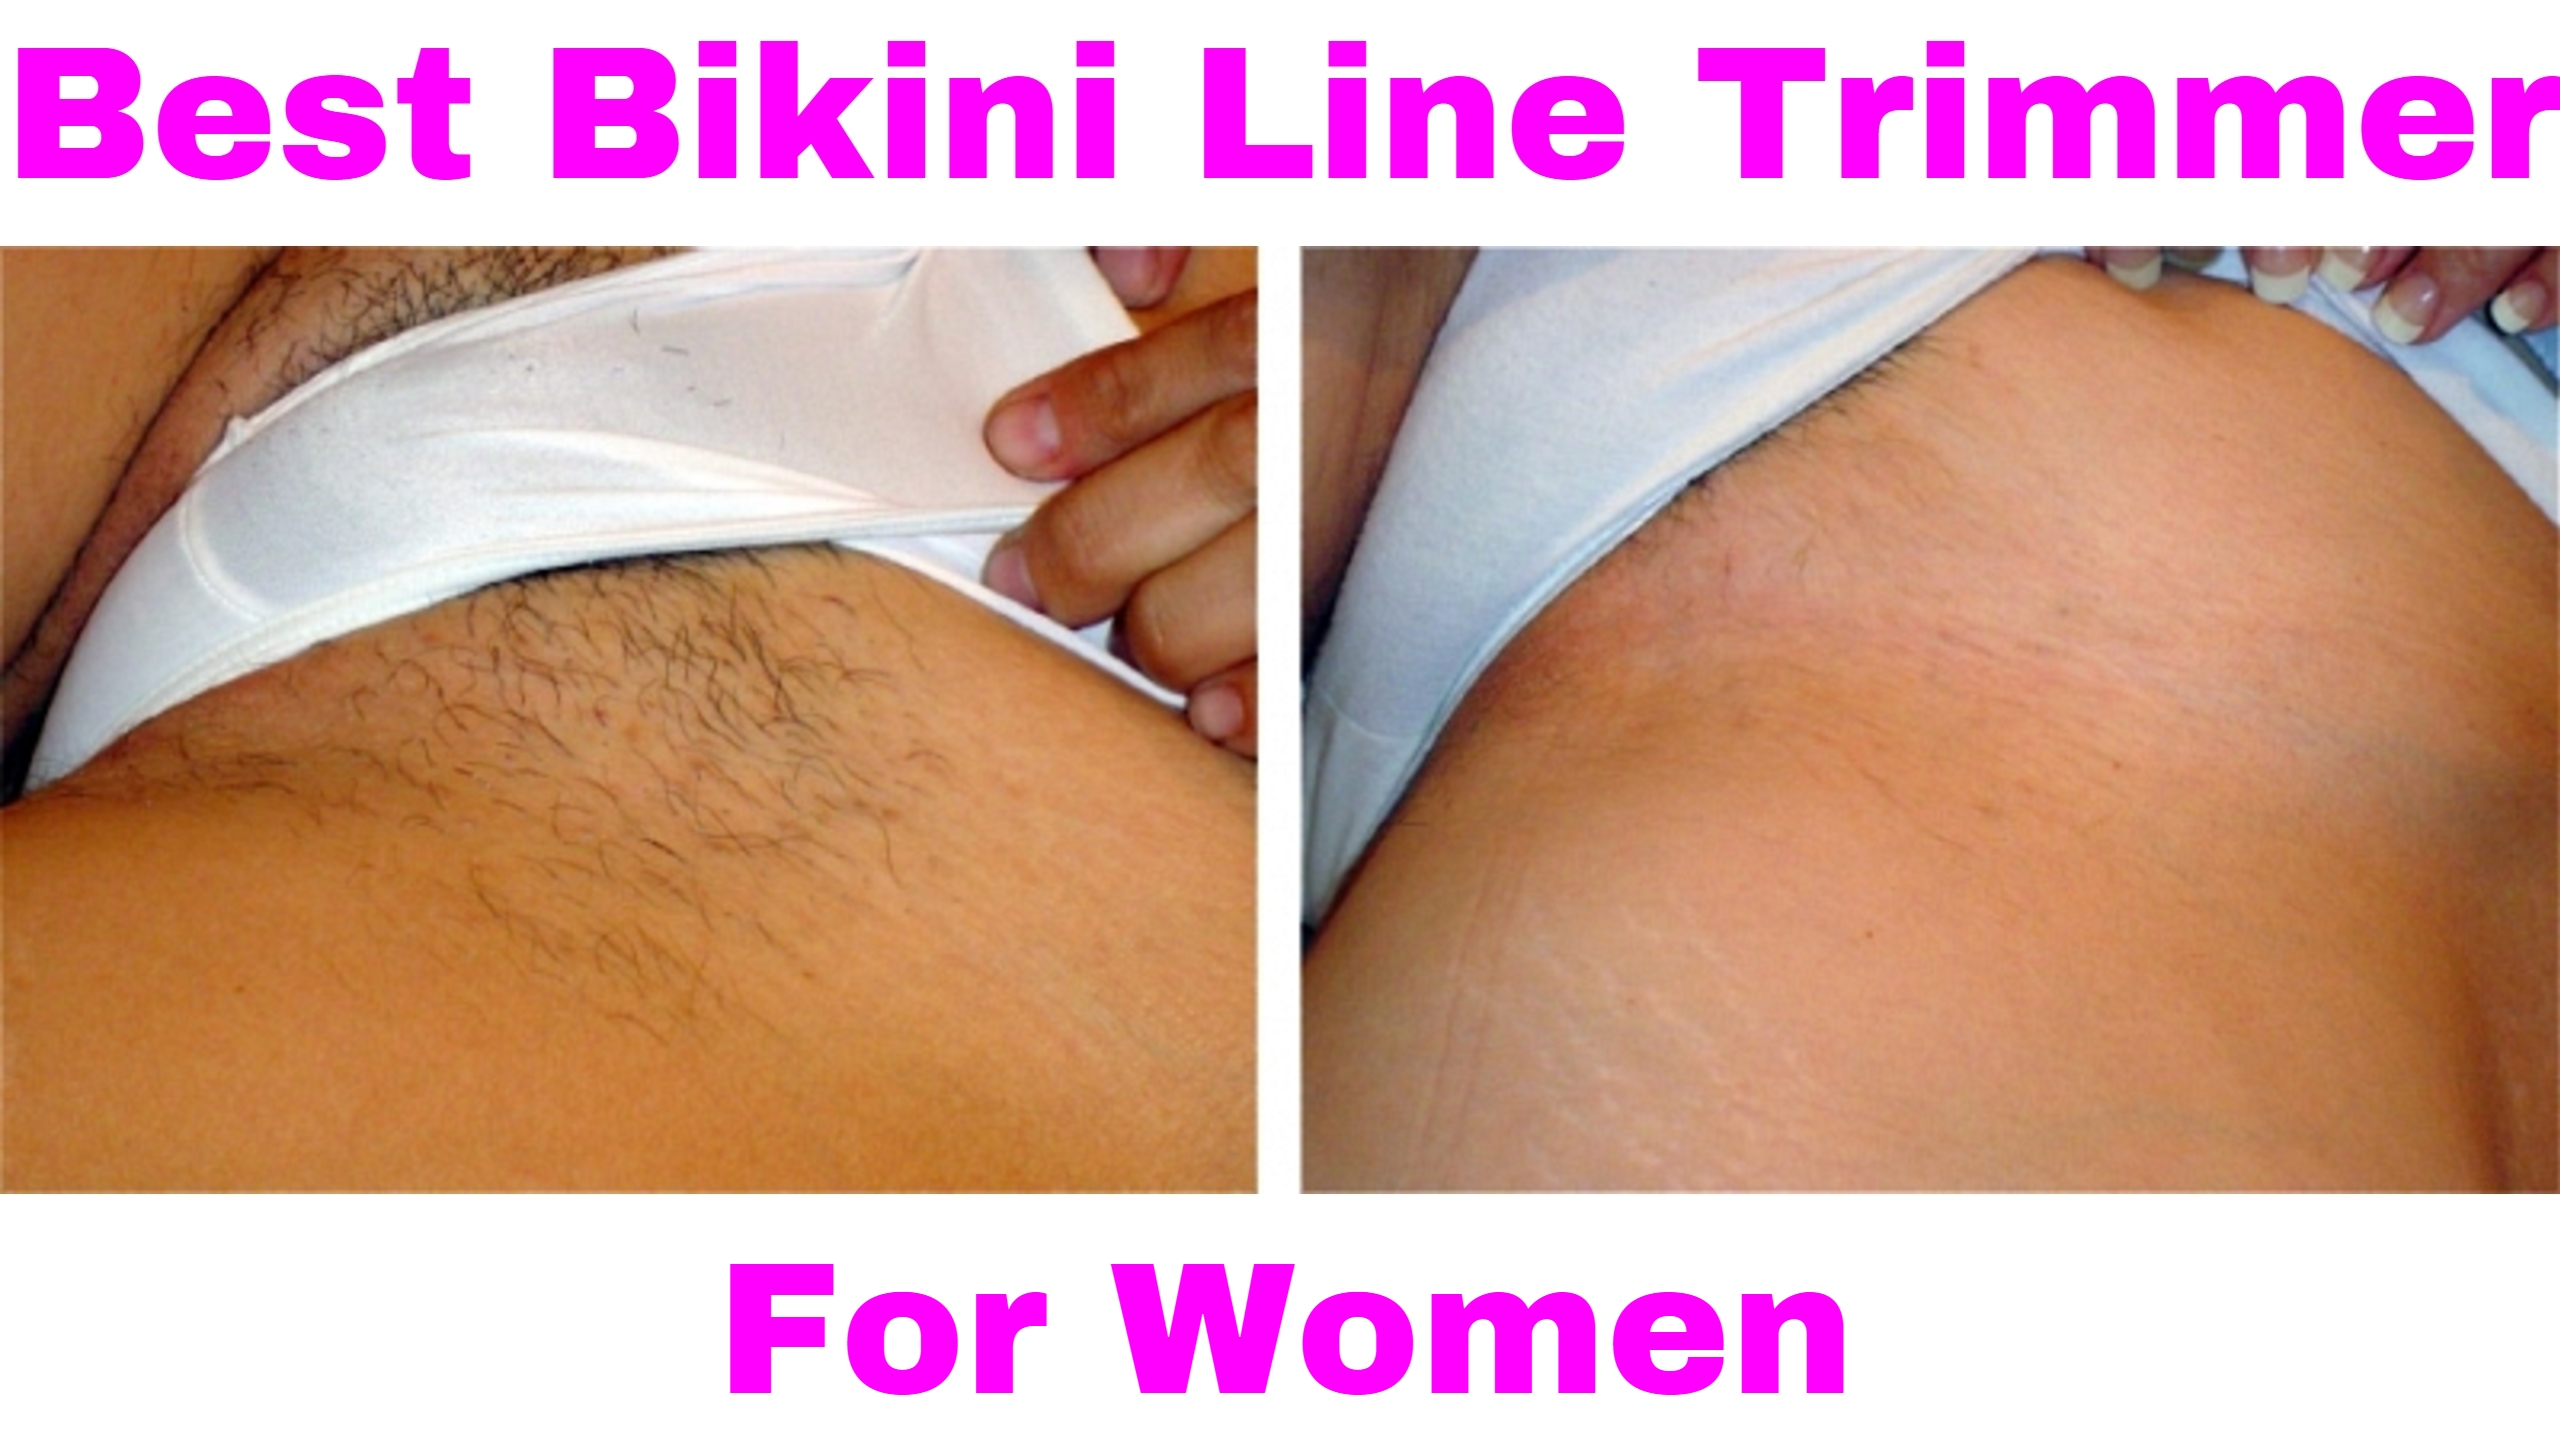 best bikini line trimmer for women in india